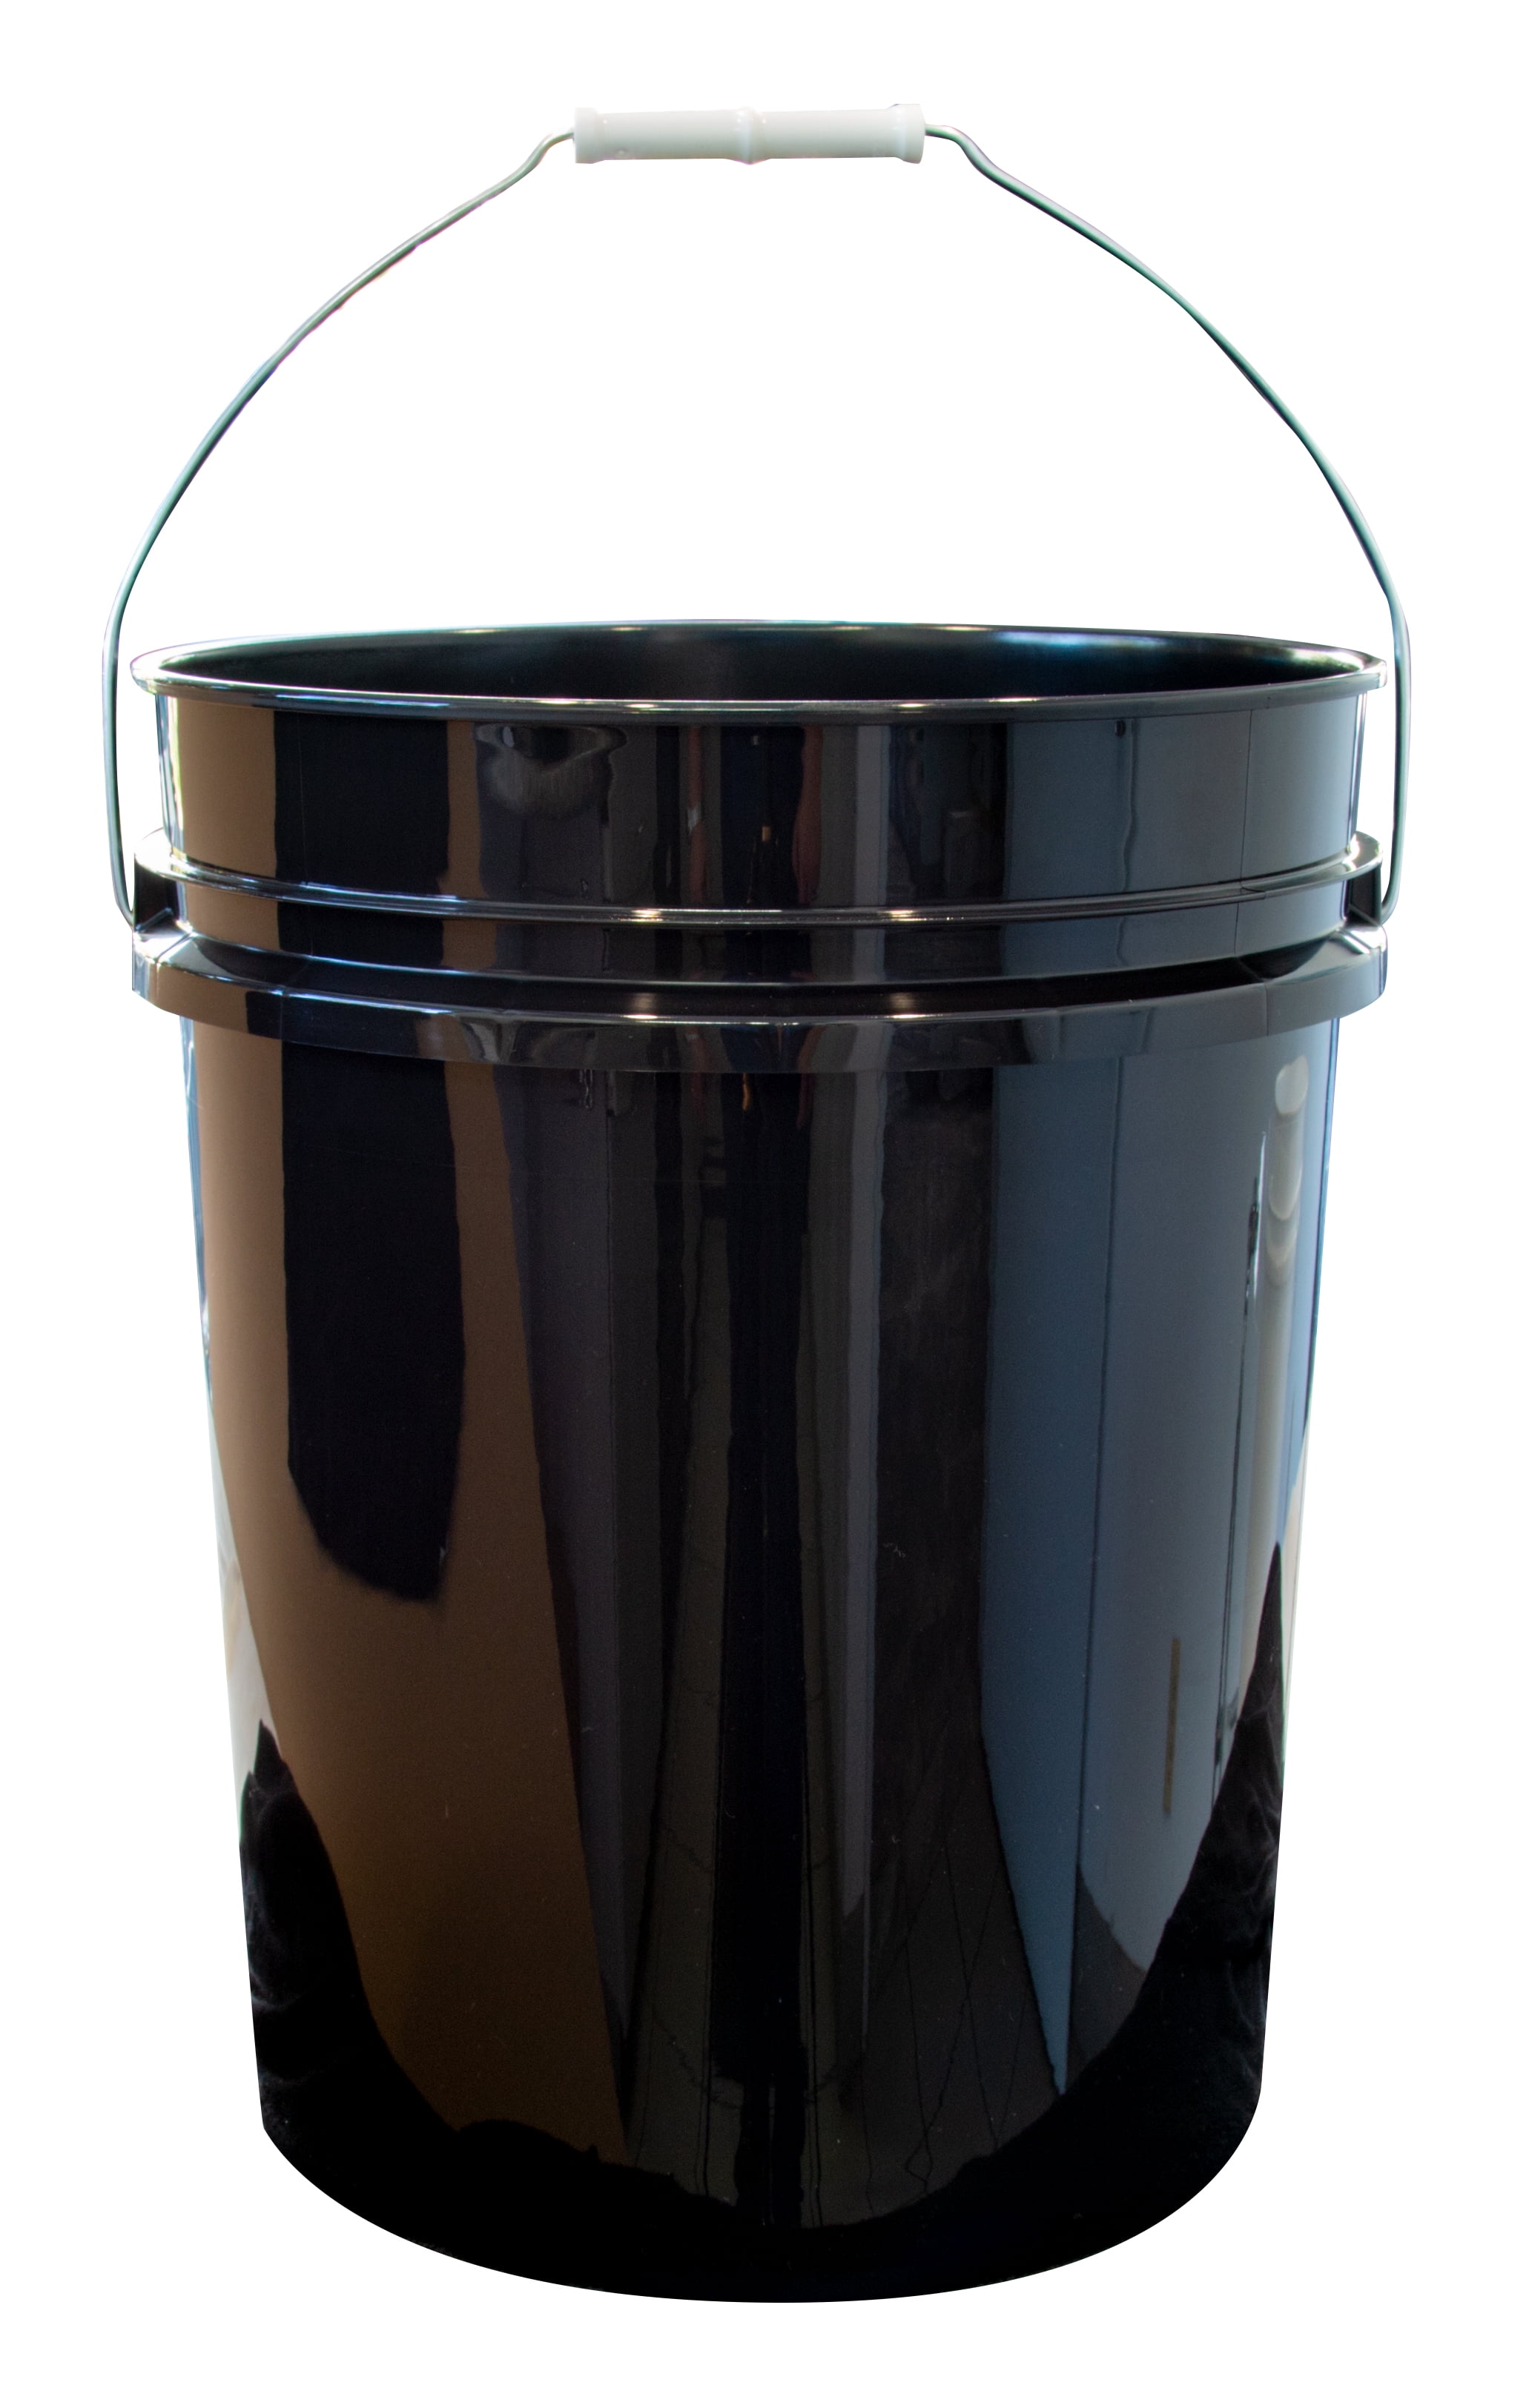 cheap black 5 gallon buckets Cheaper Than Retail Price> Buy Clothing